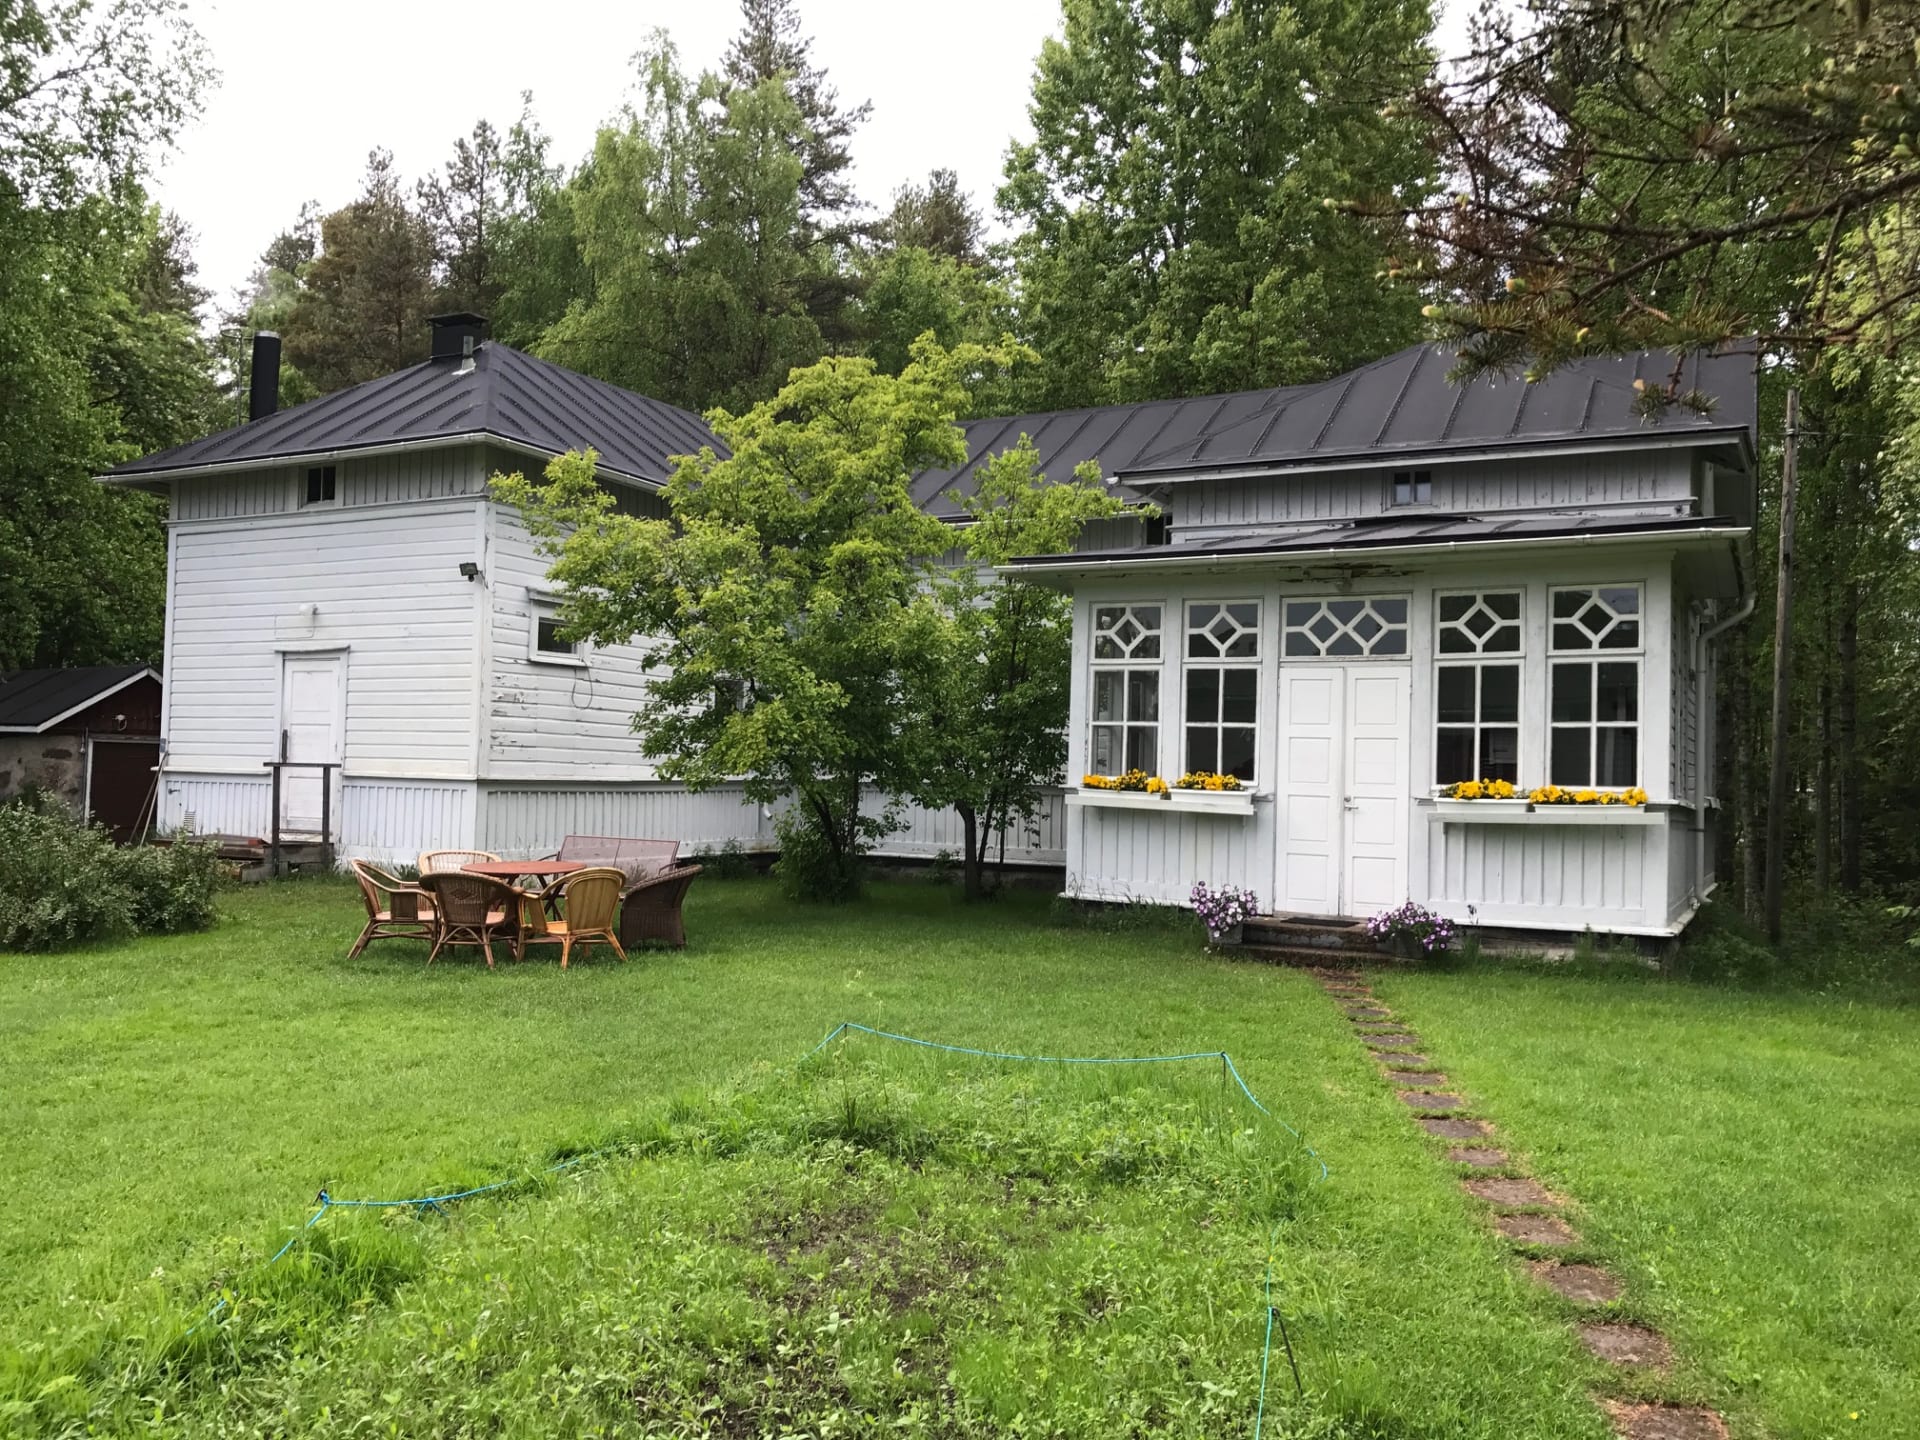 Revonlahti village house in Siikajoki, 50 km from Oulu and 25 km from Raahe.